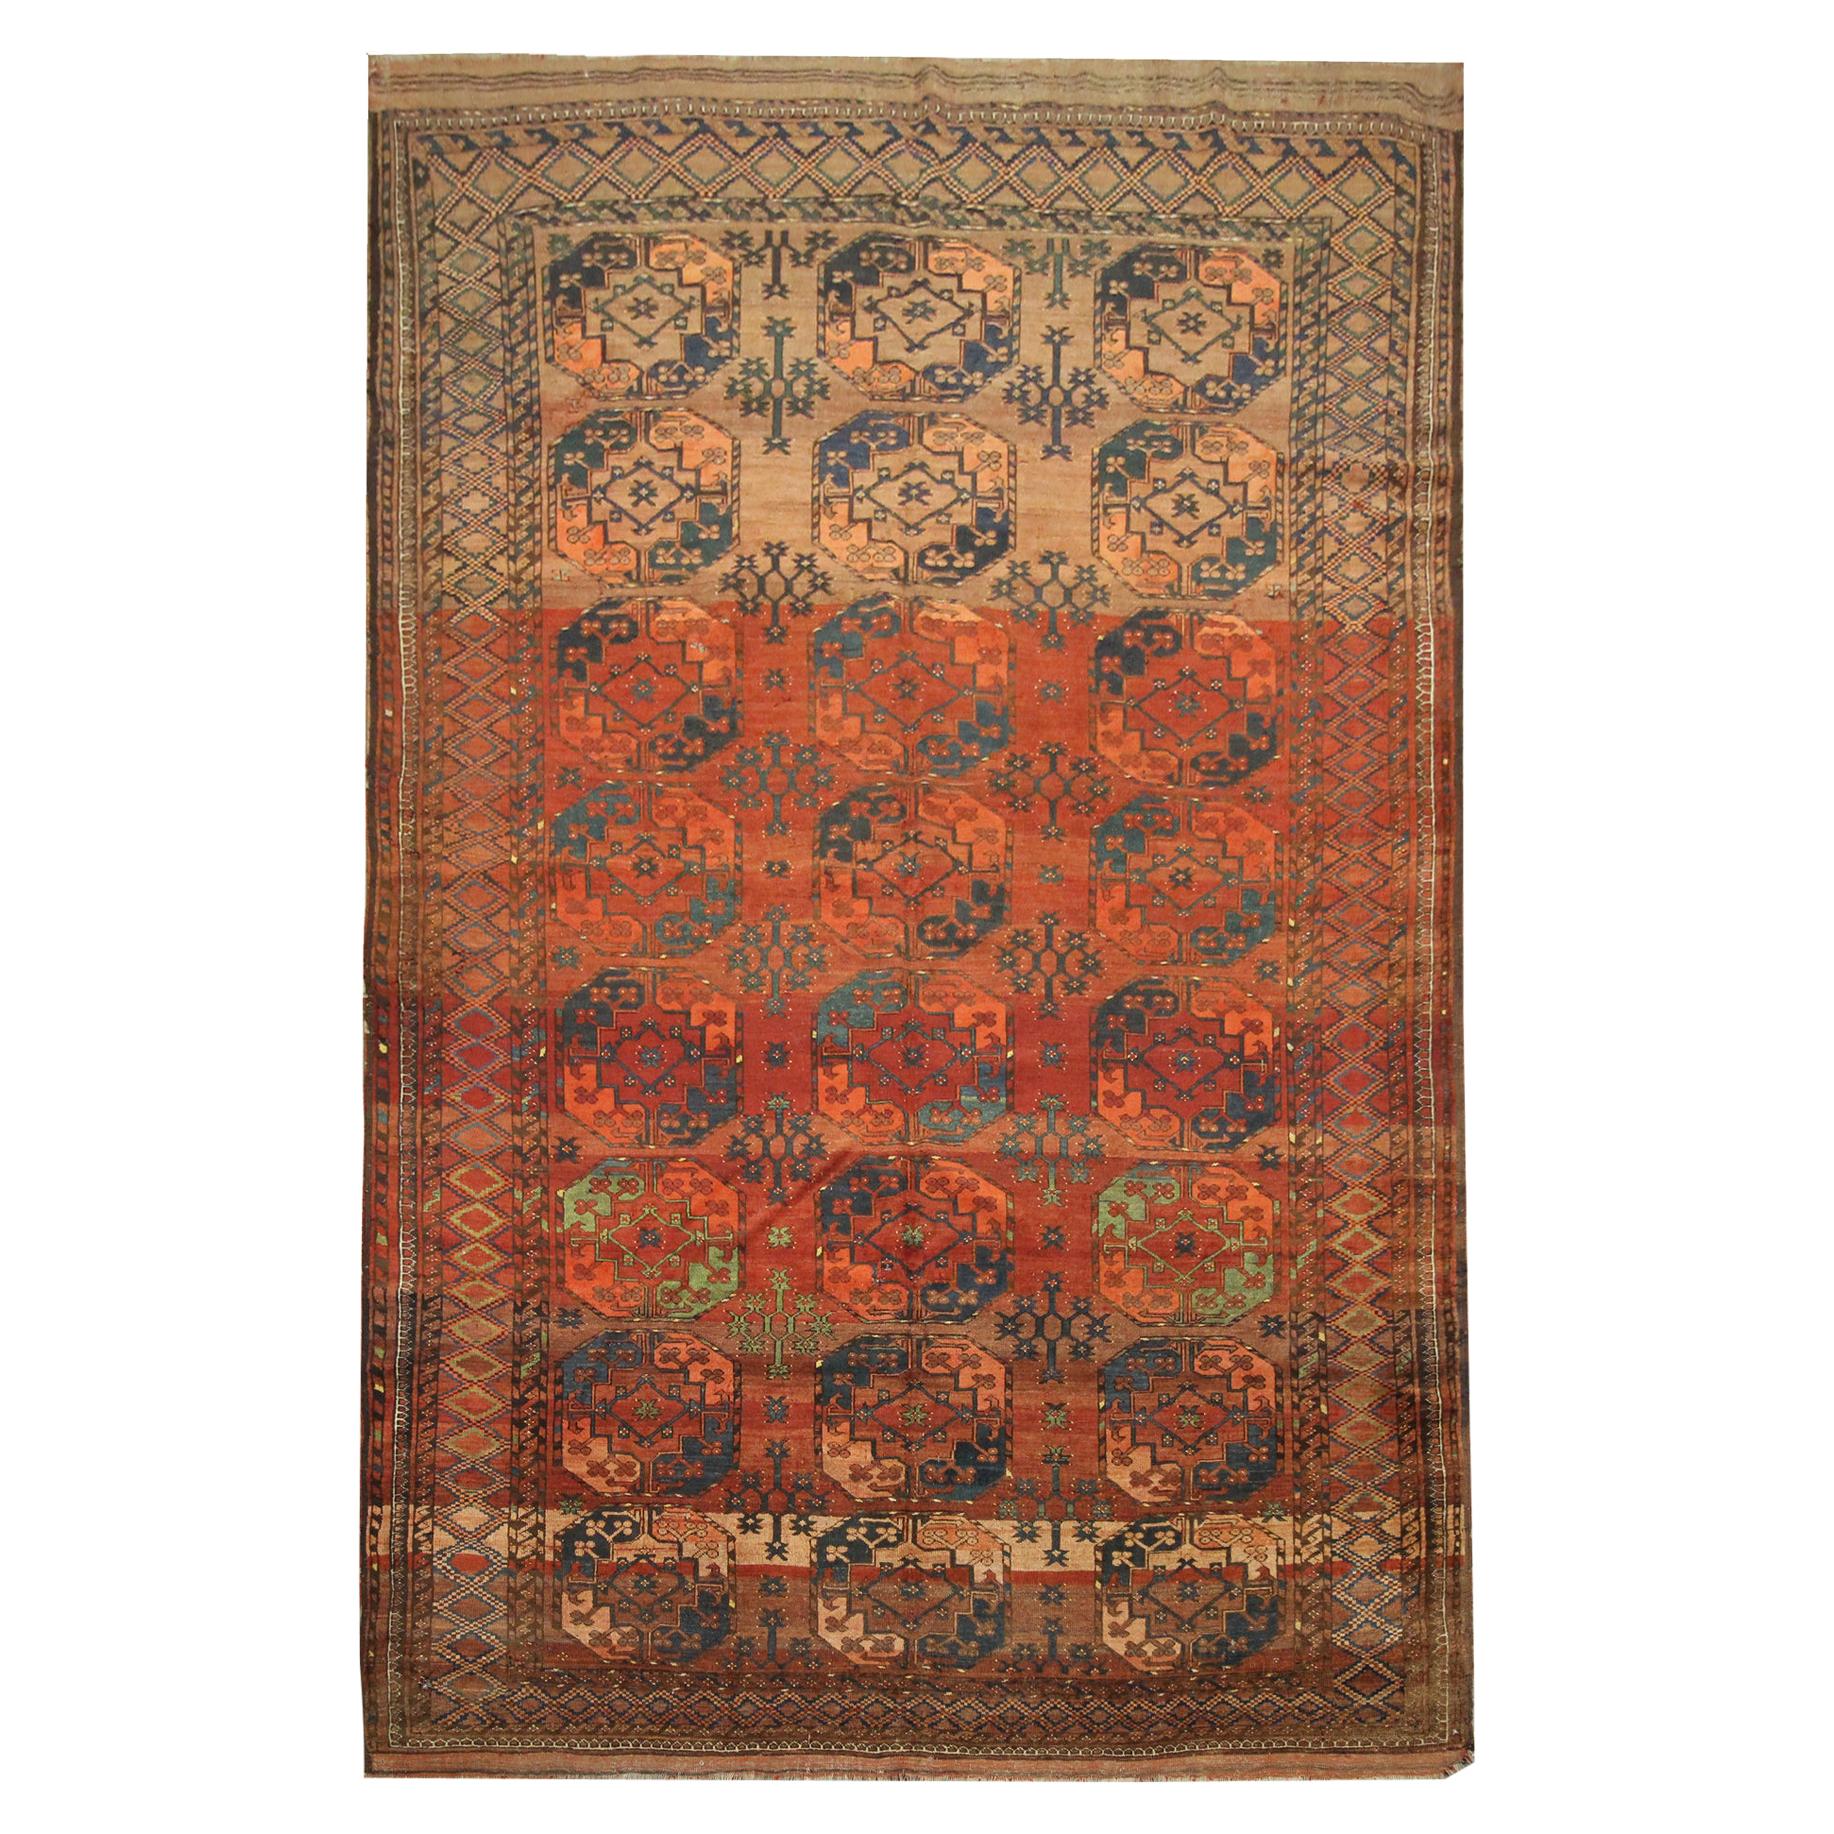 Antique Rugs Turkmen Original Ersari Handwoven Wool Area Rugs en vente